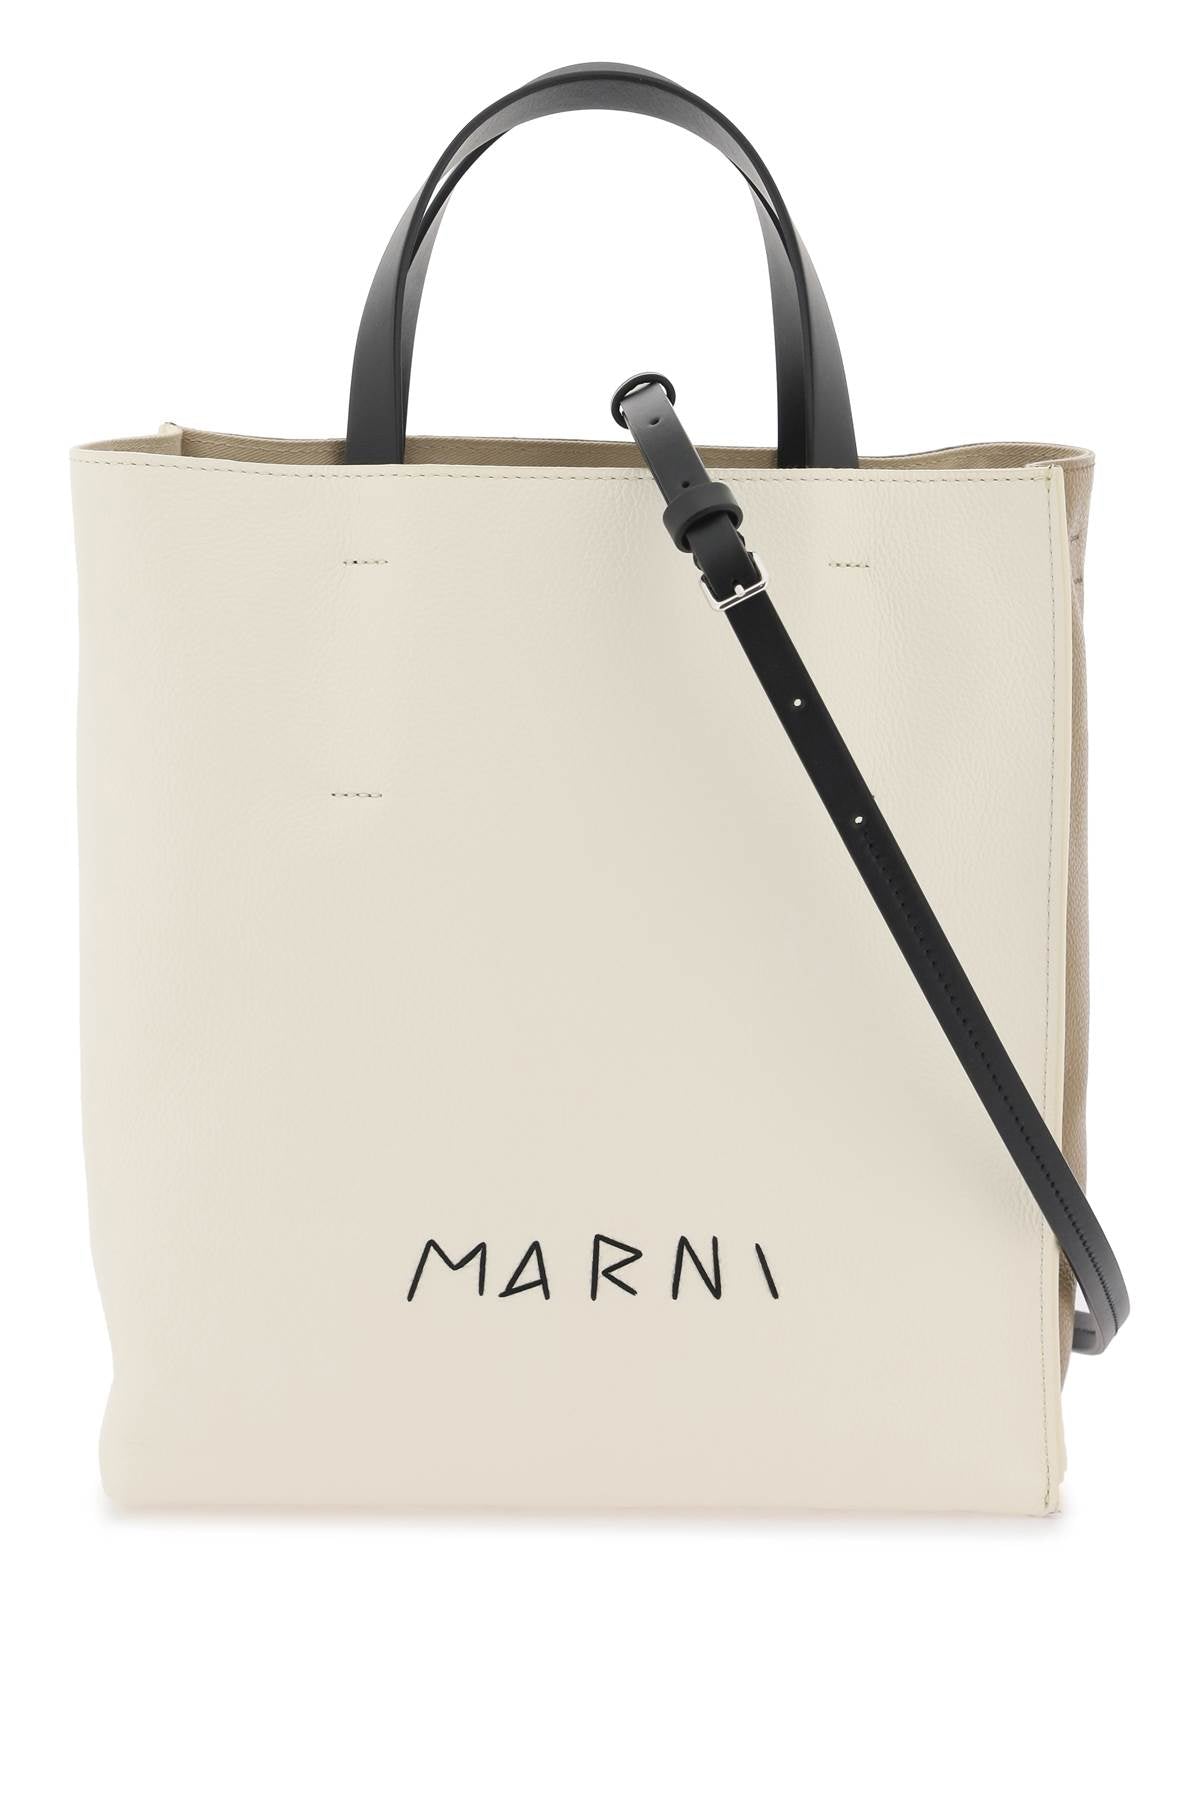 Marni leather museum tote bag-0